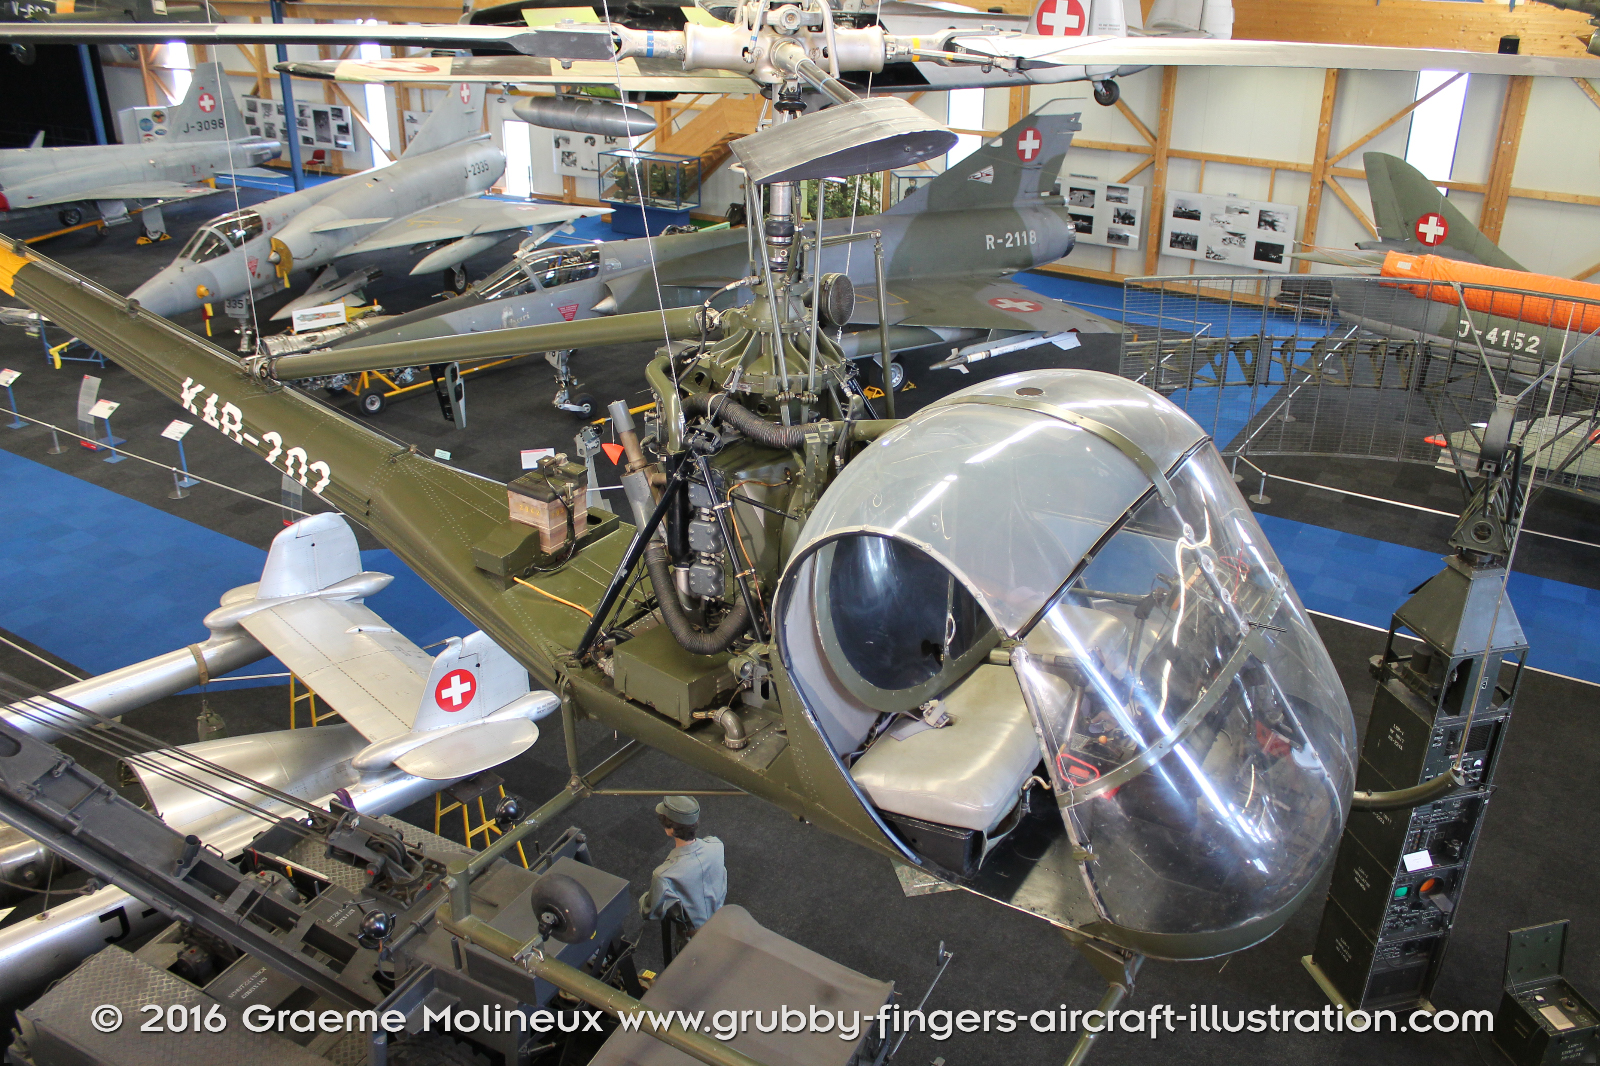 HILLER_UH-12A_KAB-202_Swiss_Air_Force_Museum_2015_03_GrubbyFingers